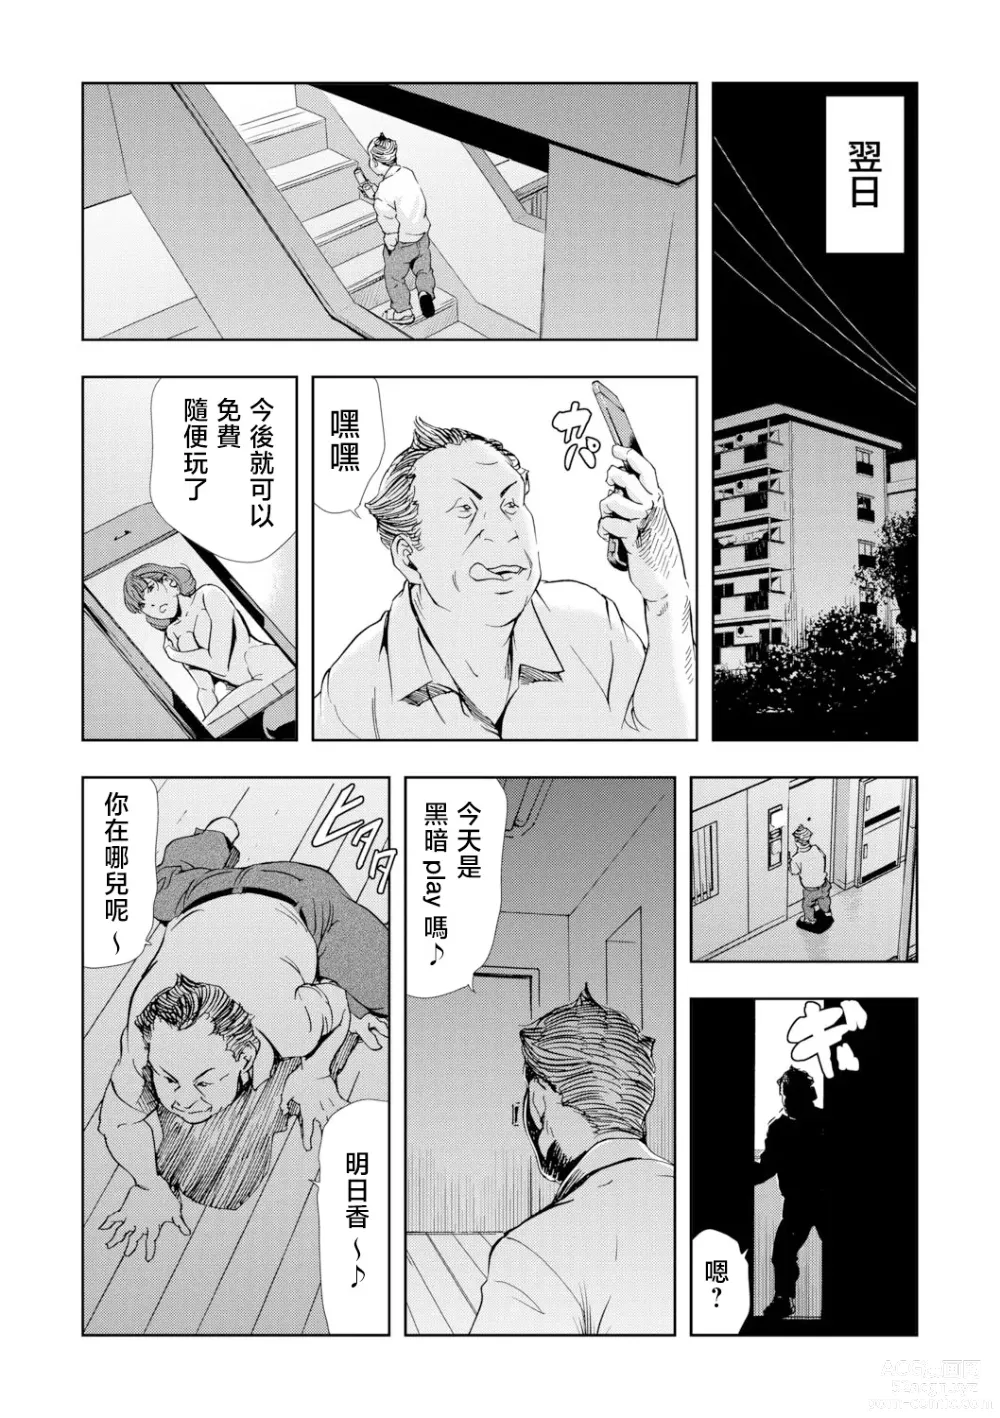 Page 26 of manga Netorare Vol.03